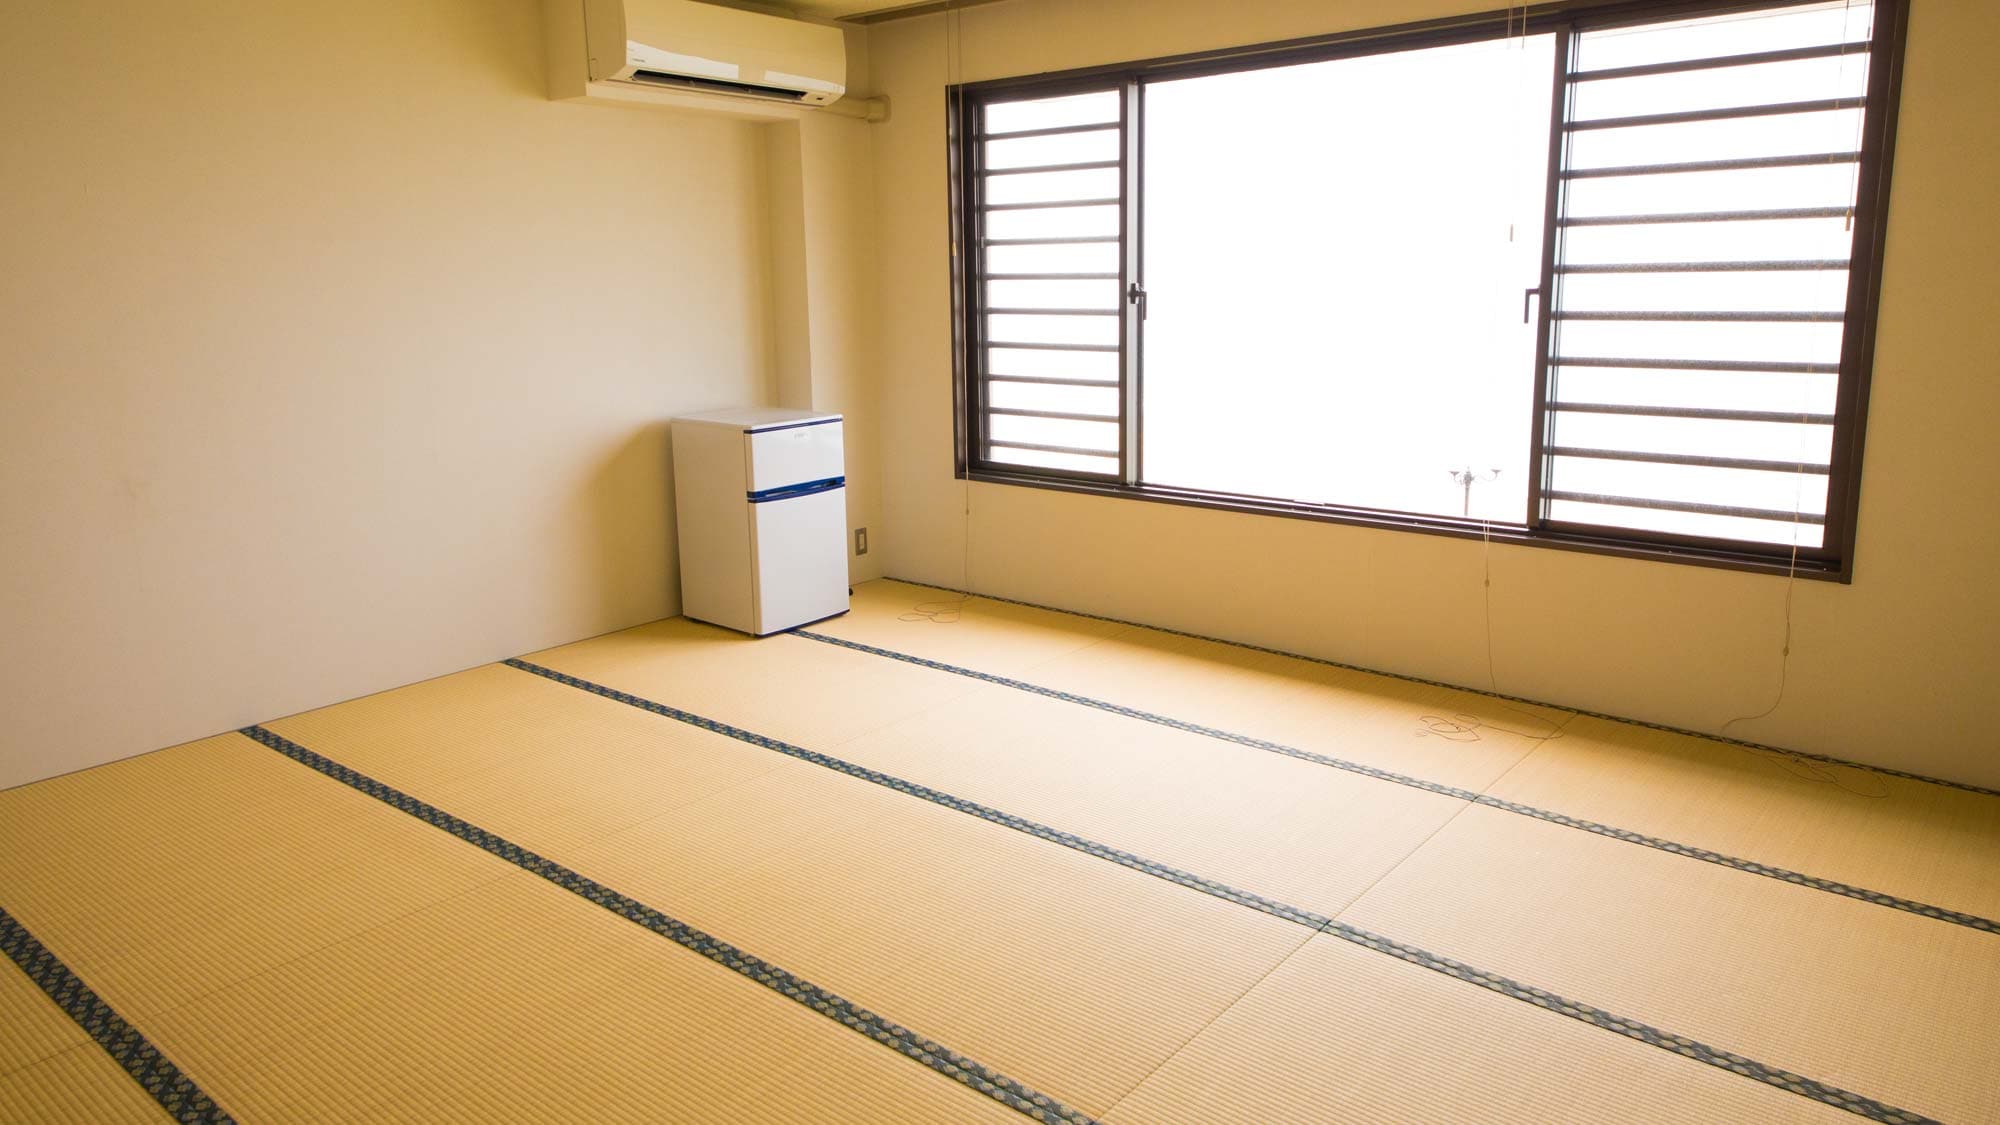 Japanese-style room 15 tatami mats